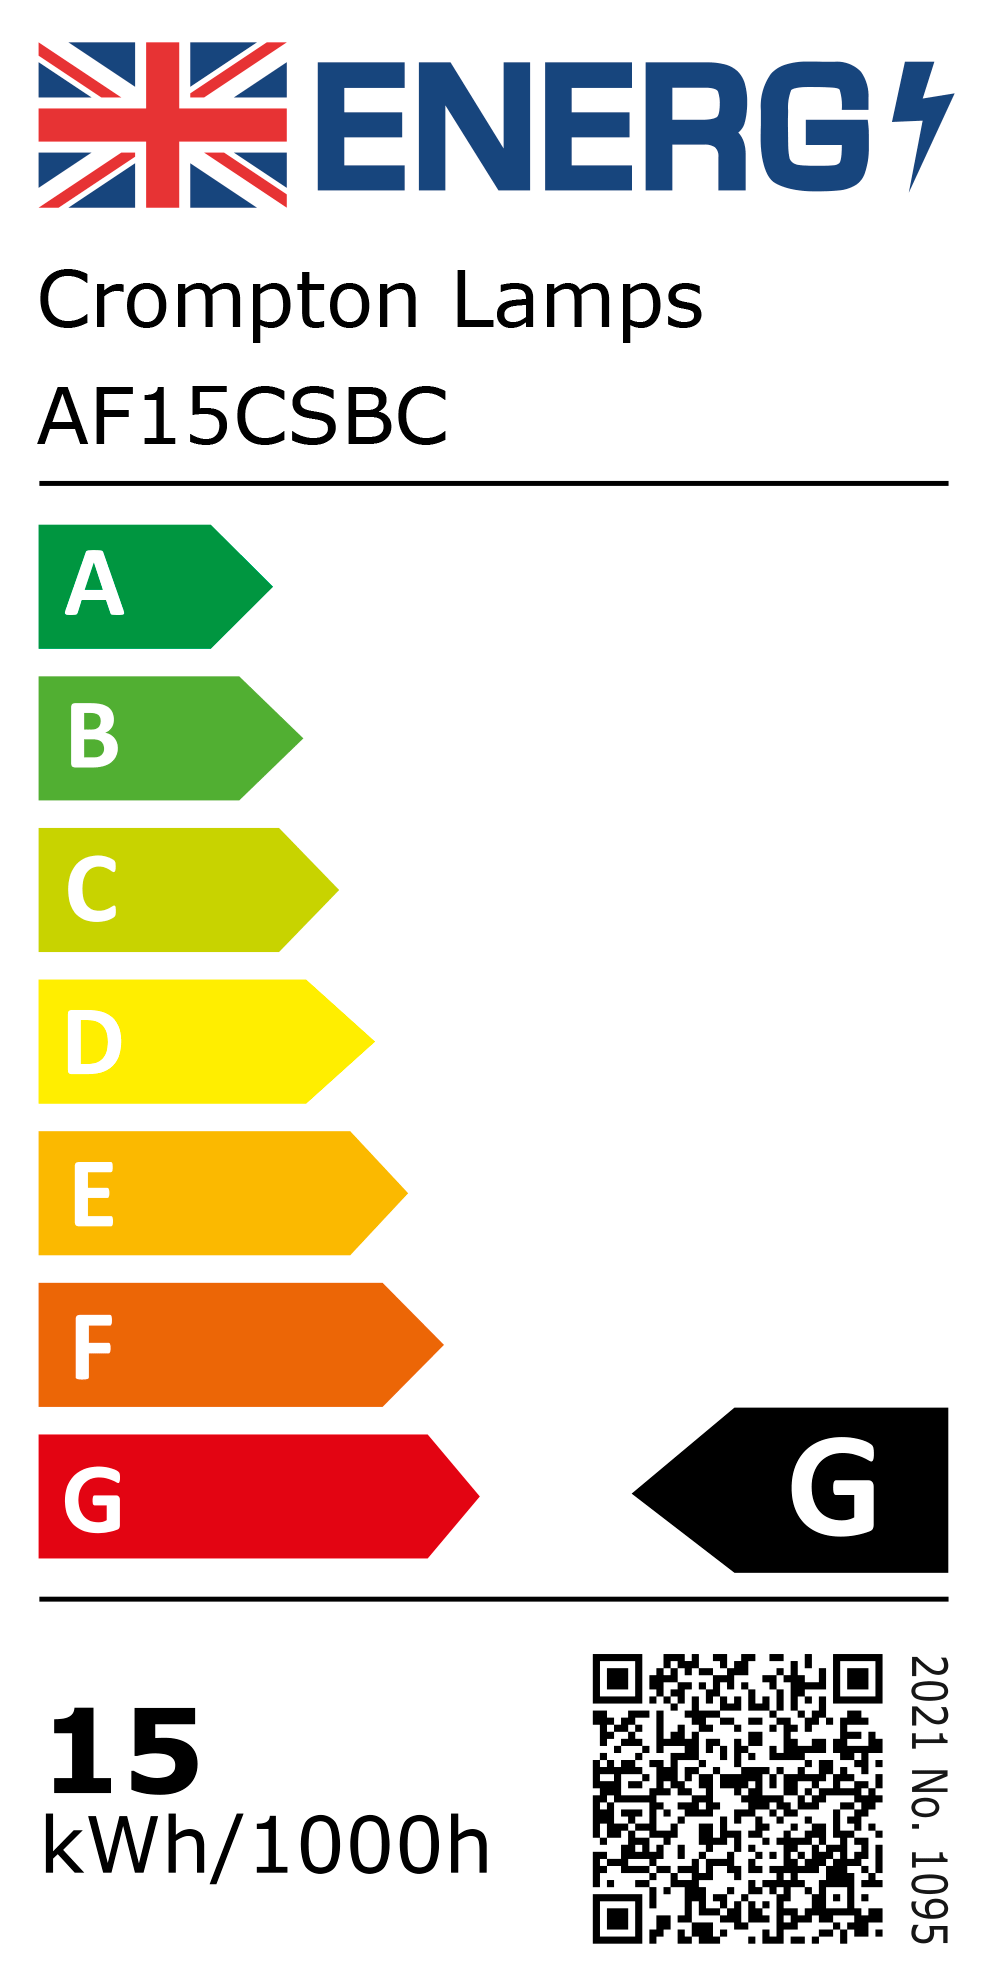 New 2021 Energy Rating Label: Stock Code AF15CSBC